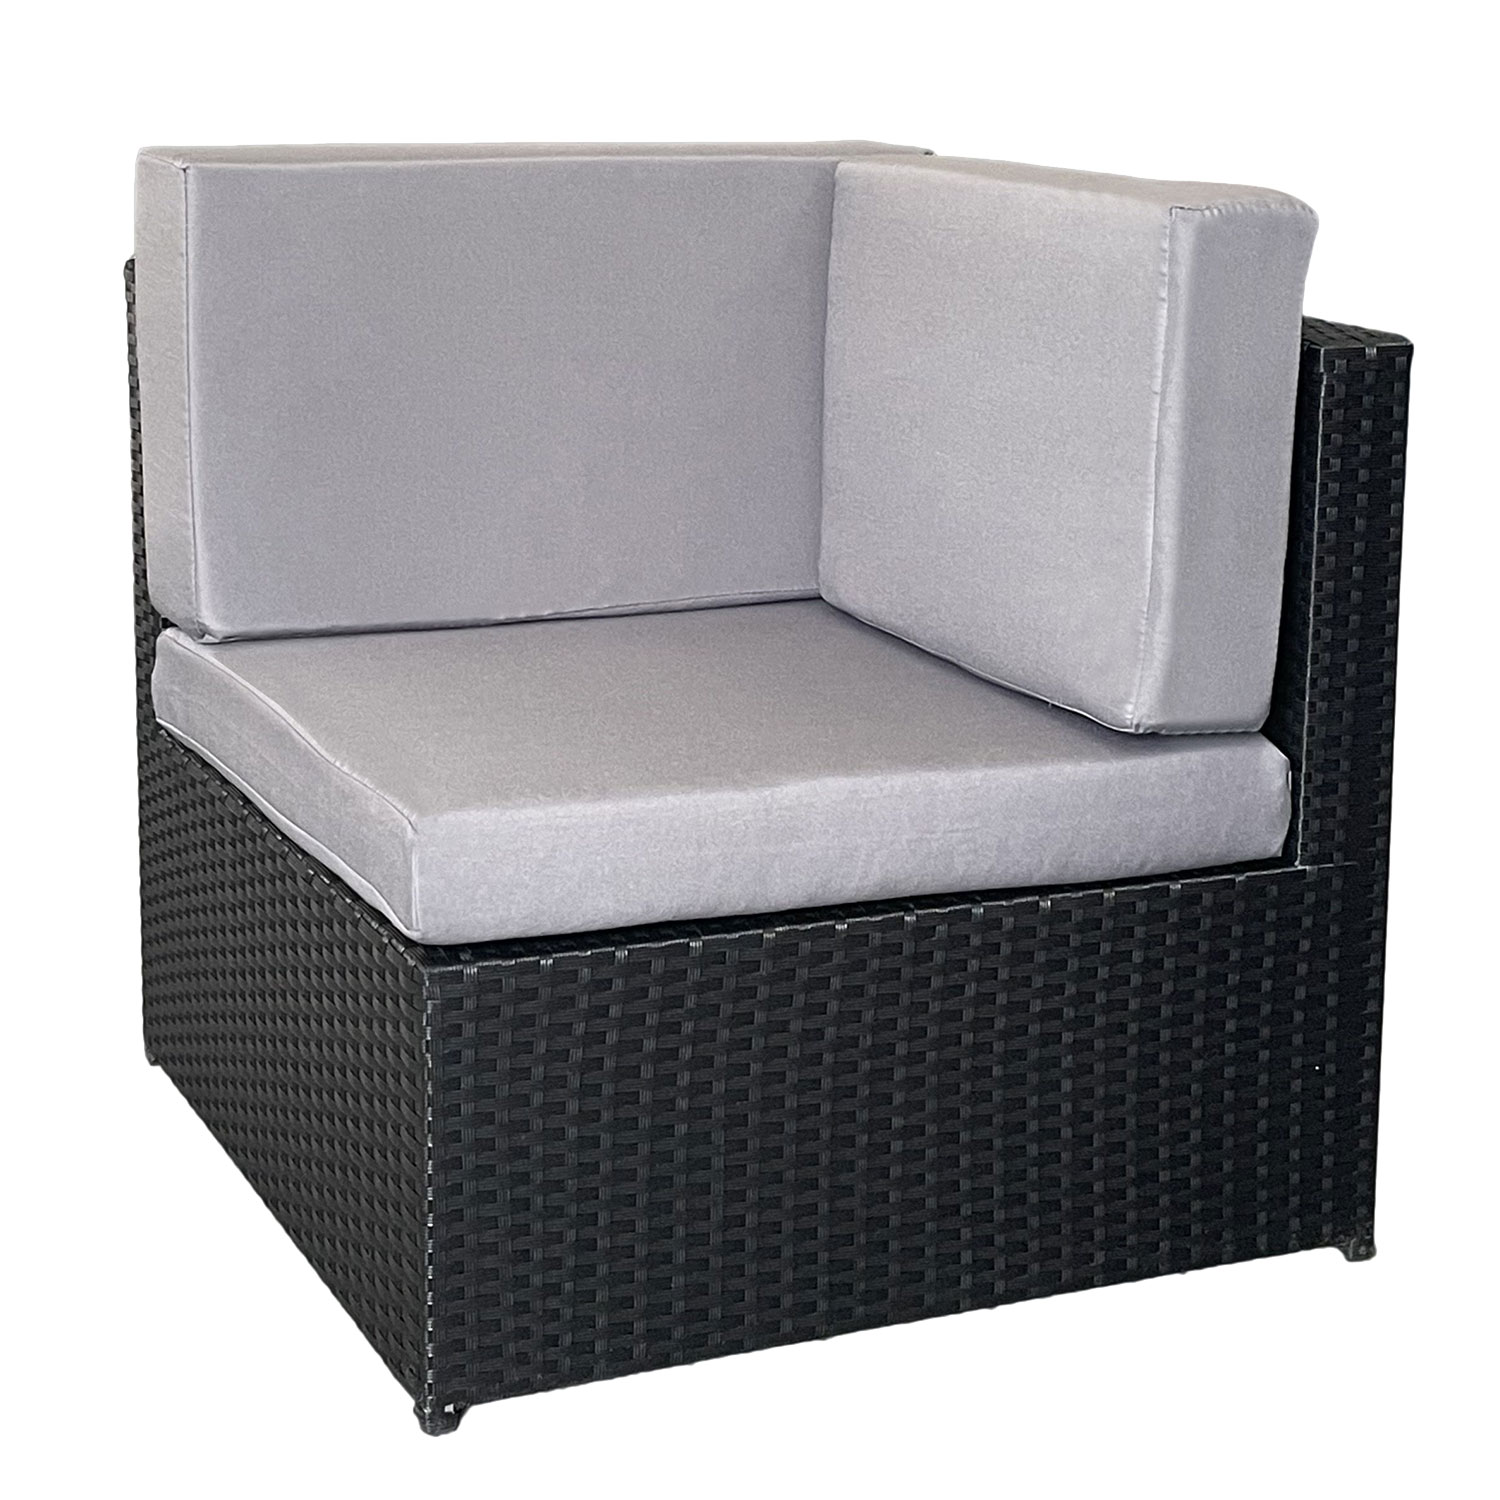 Gartenmöbel BONIFACIO aus schwarzem Harzgeflecht 6 Sitzplätze - graues Kissen